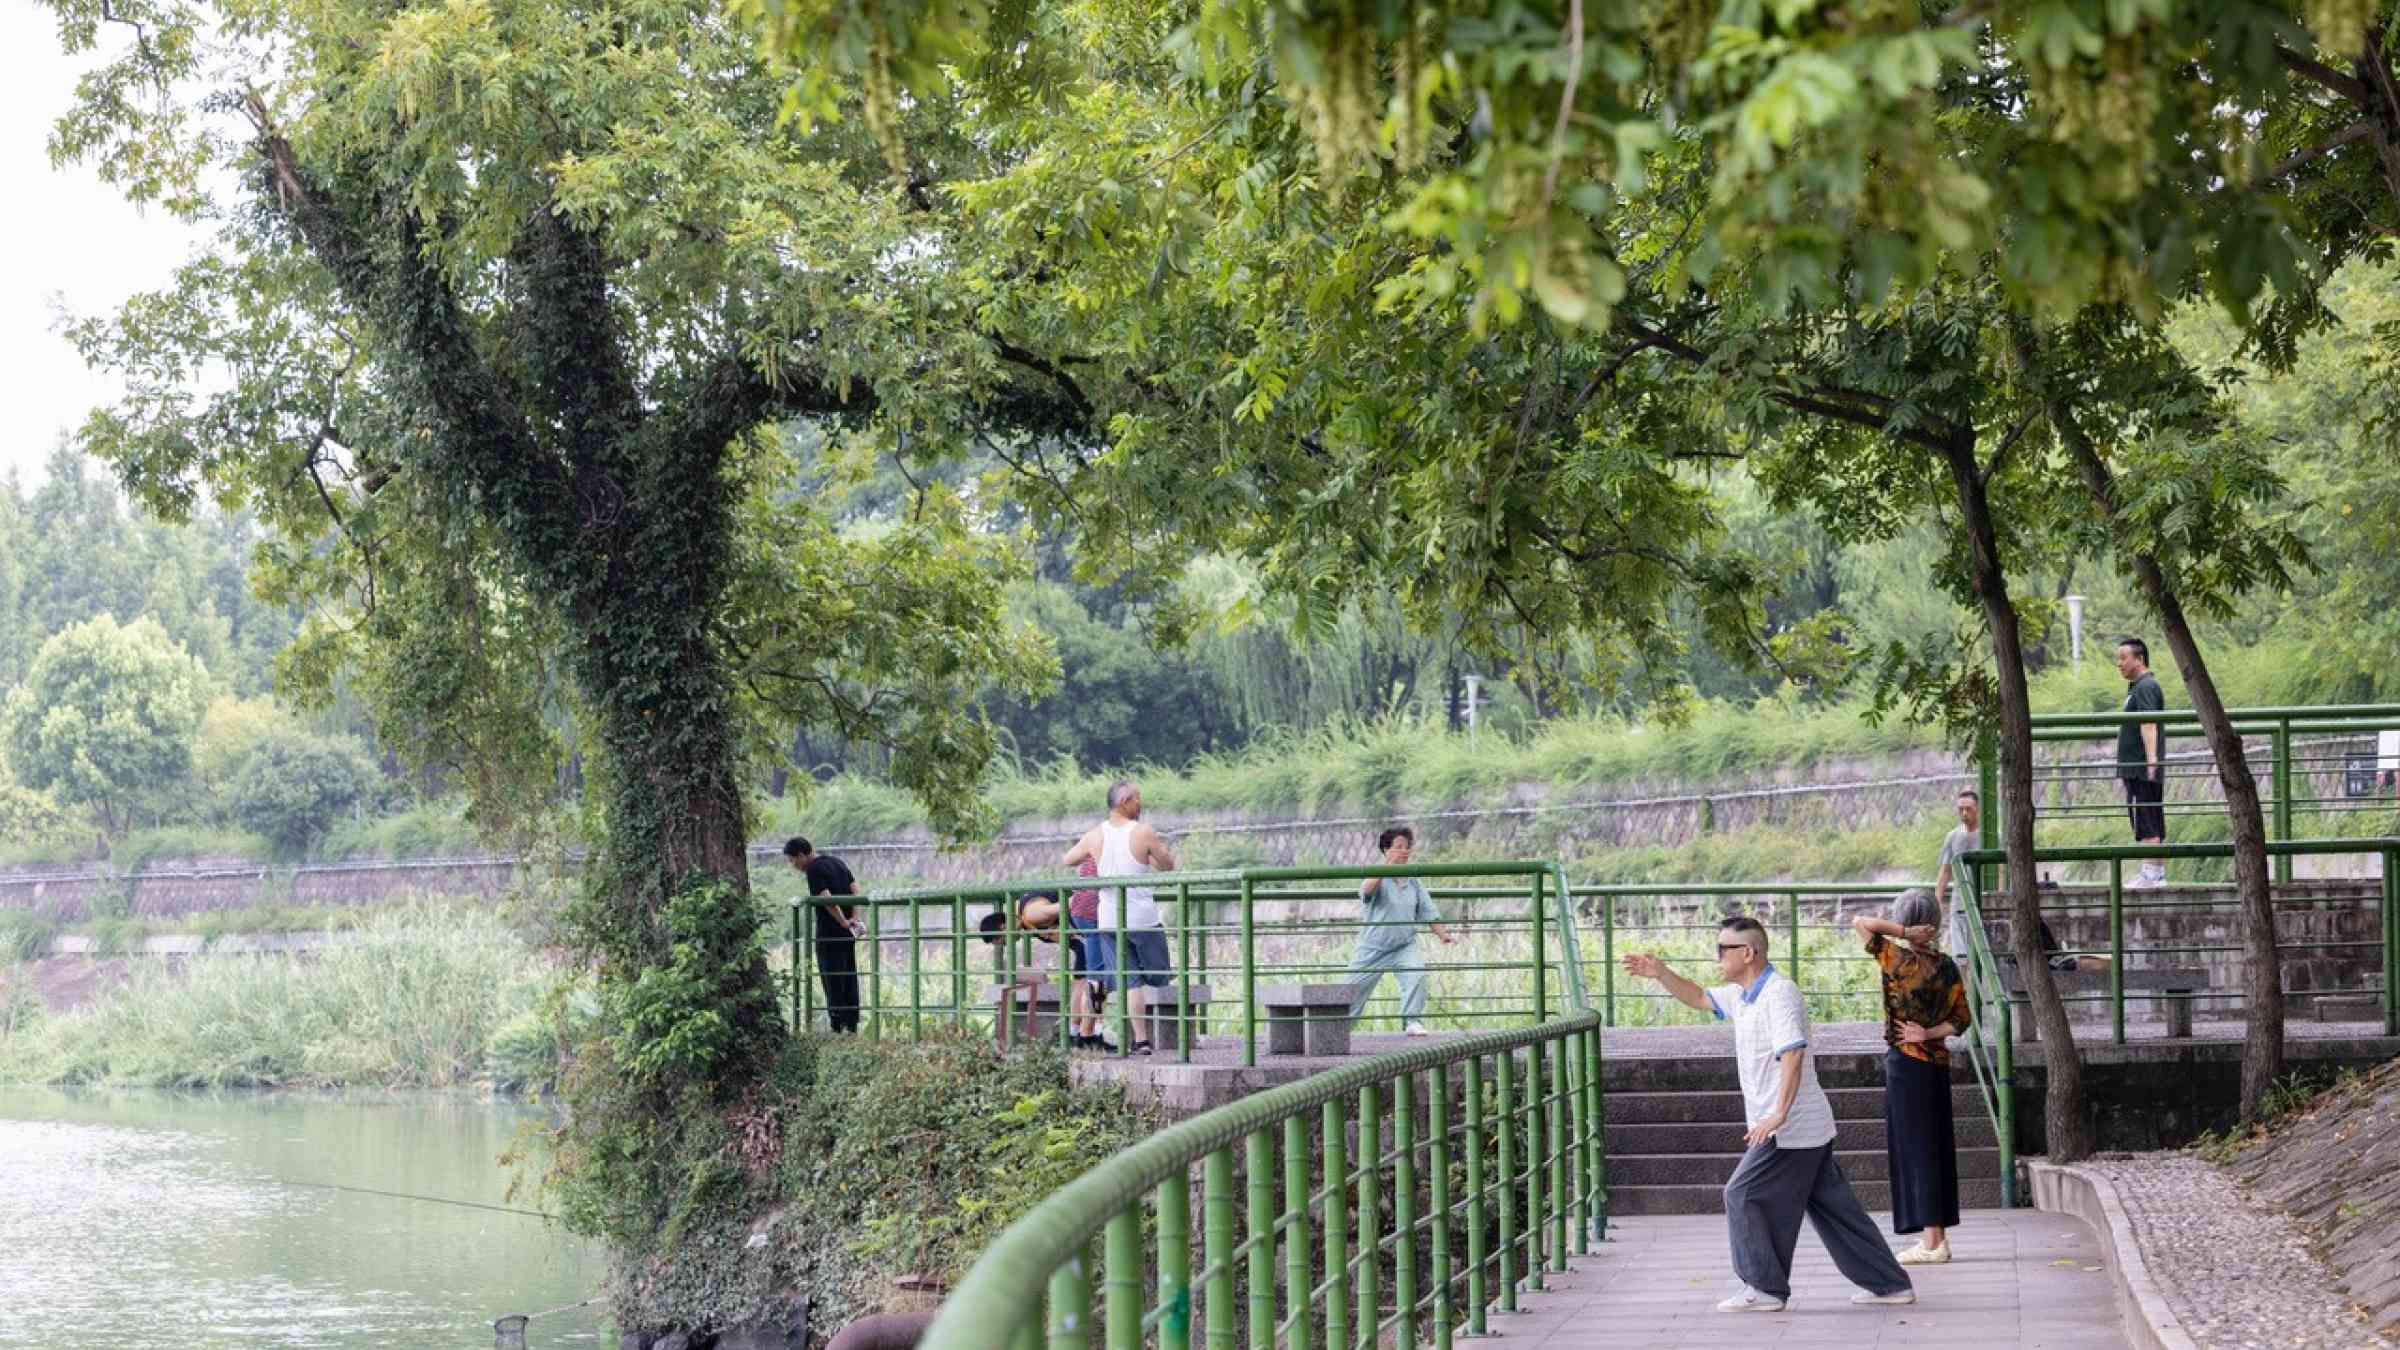 Residents exercise in Zhuji park, in China